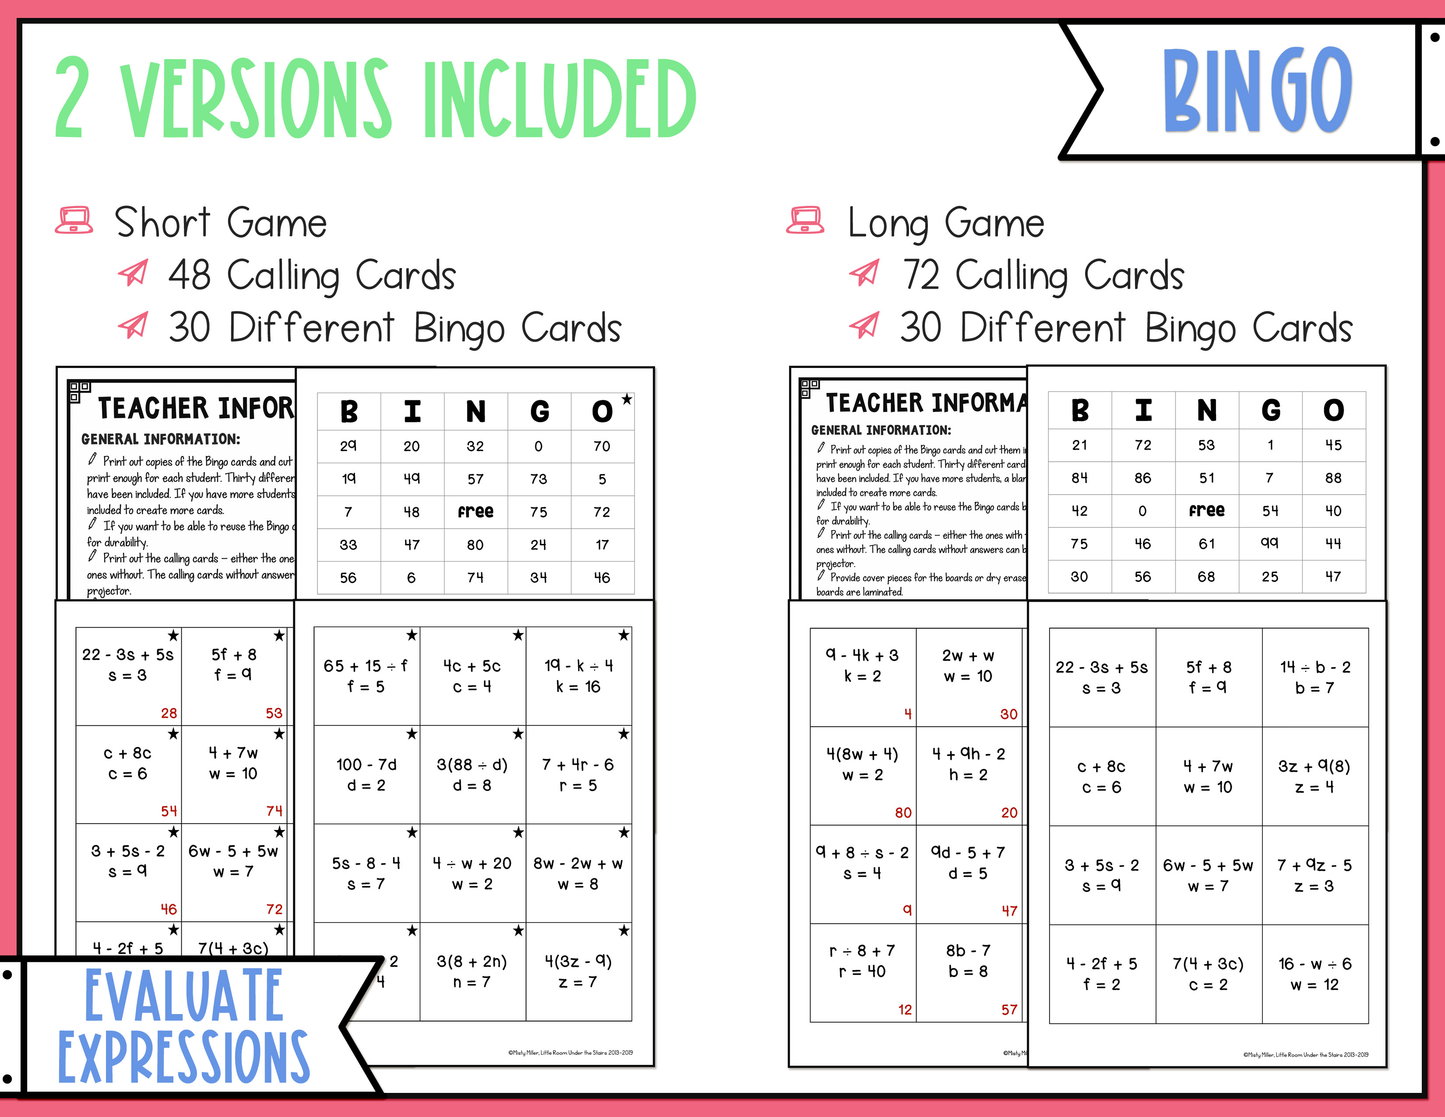 Evaluating Expressions BINGO Math Game